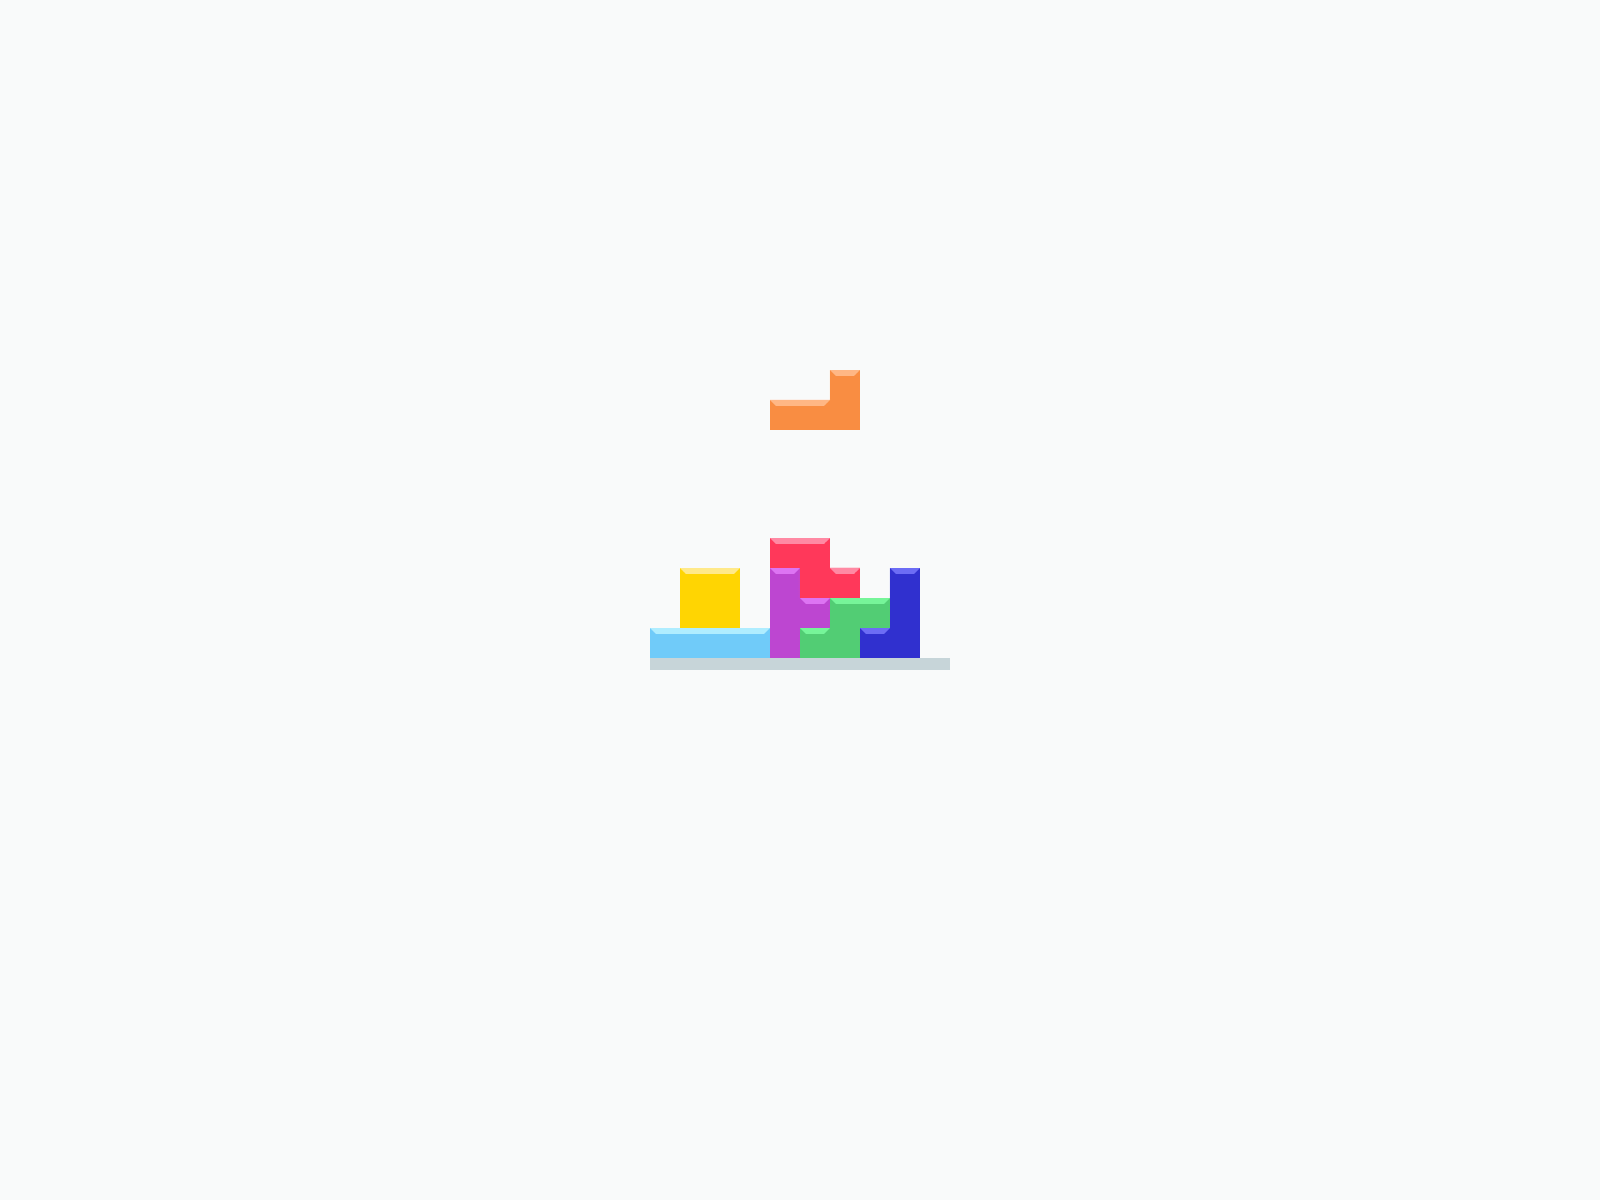 Tetris Loading Animation